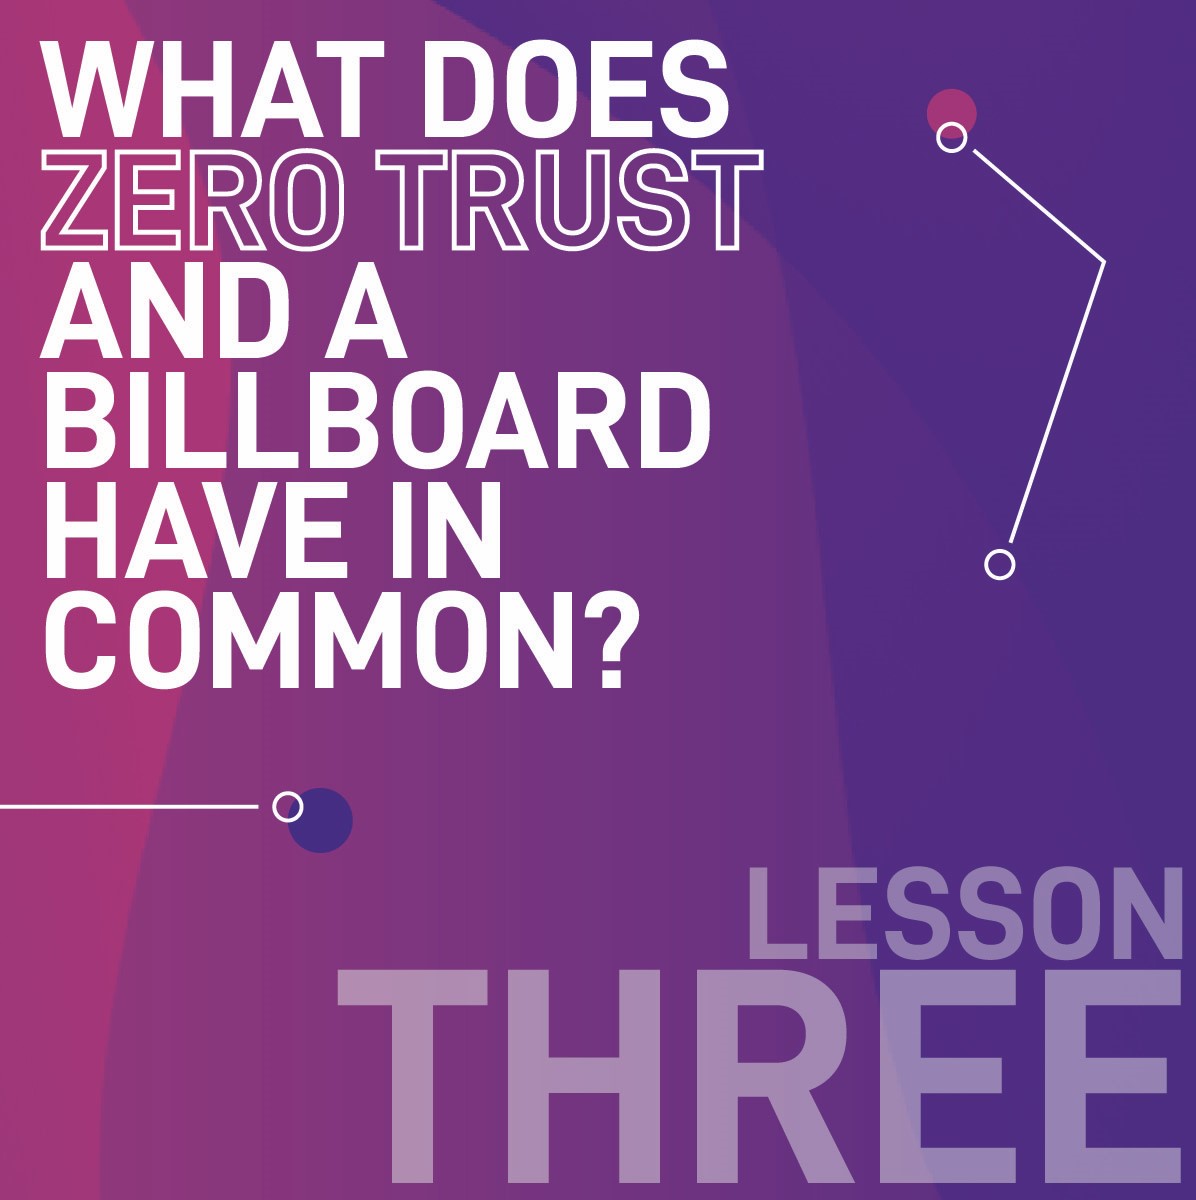 Zero trust is a good lesson. 